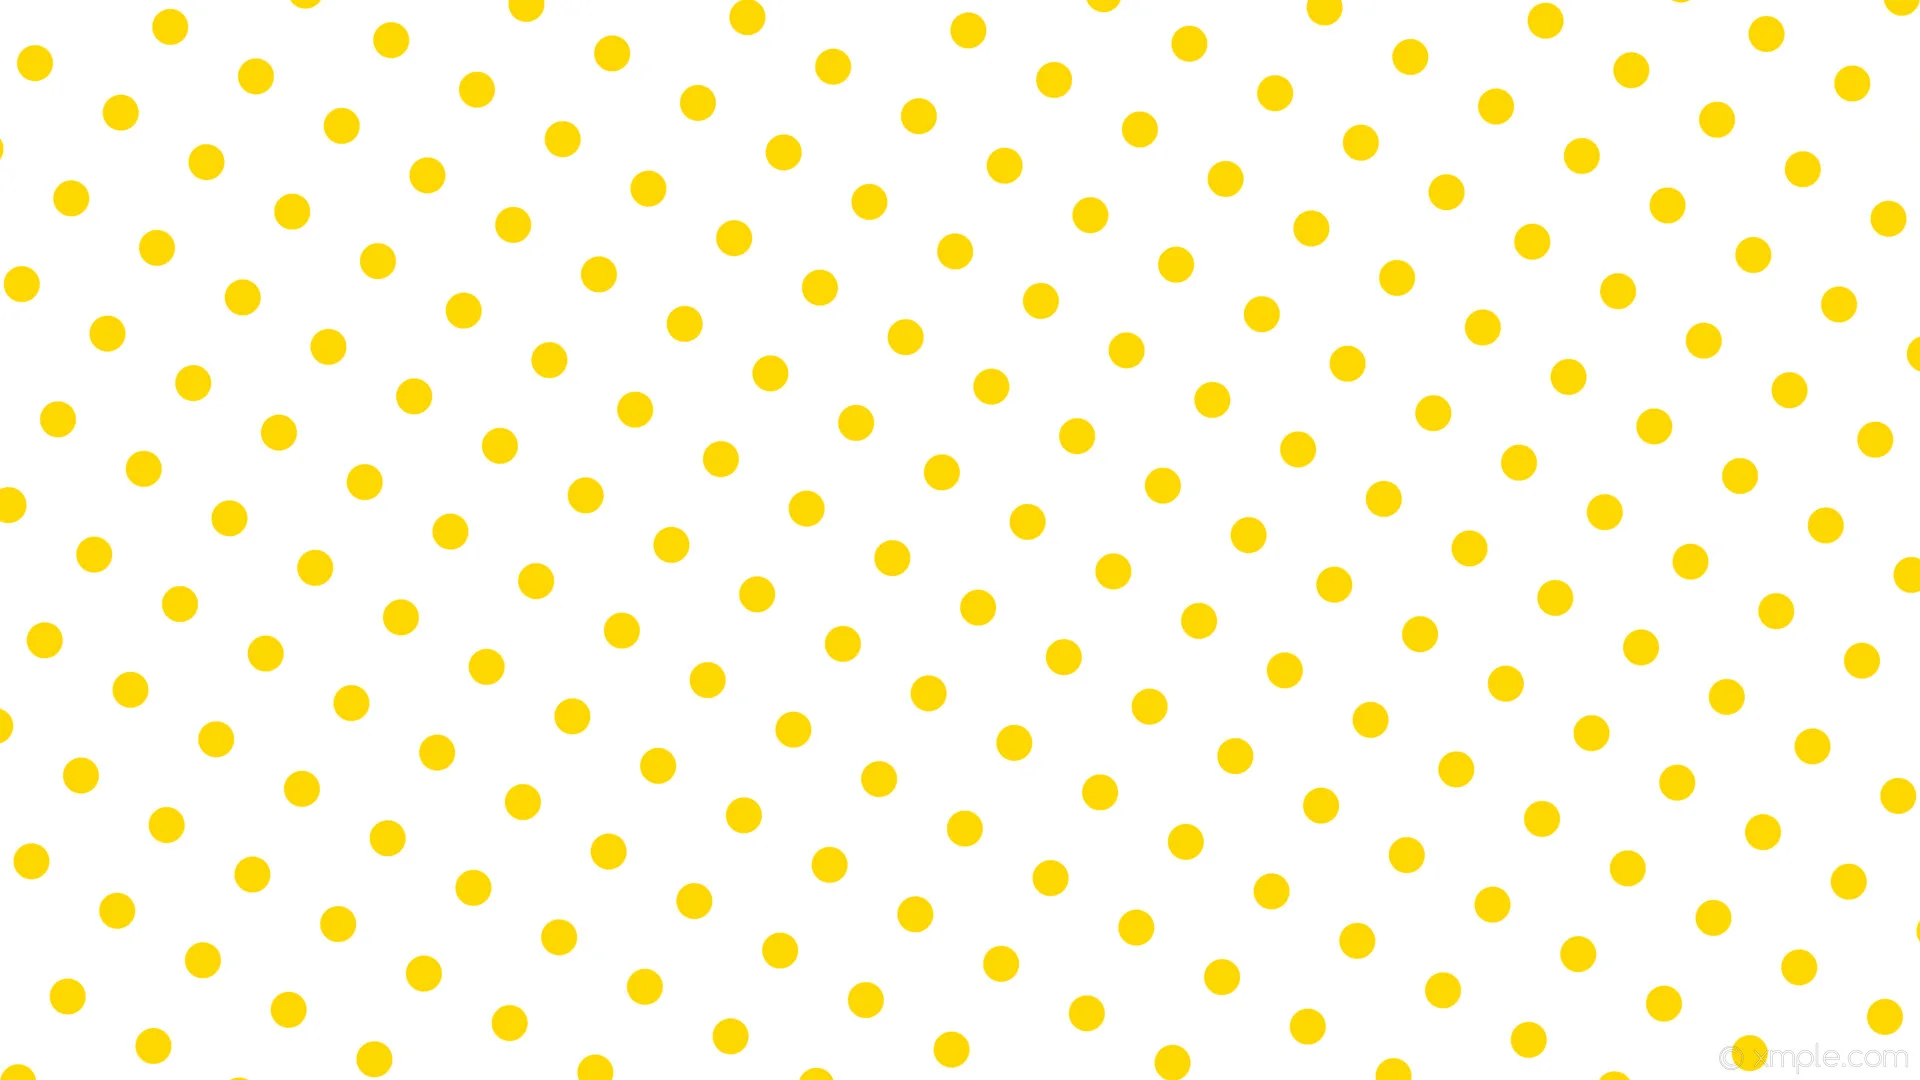 Wallpaper yellow polka white spots dots gold #ffffff #ffd700 240 36px 99px